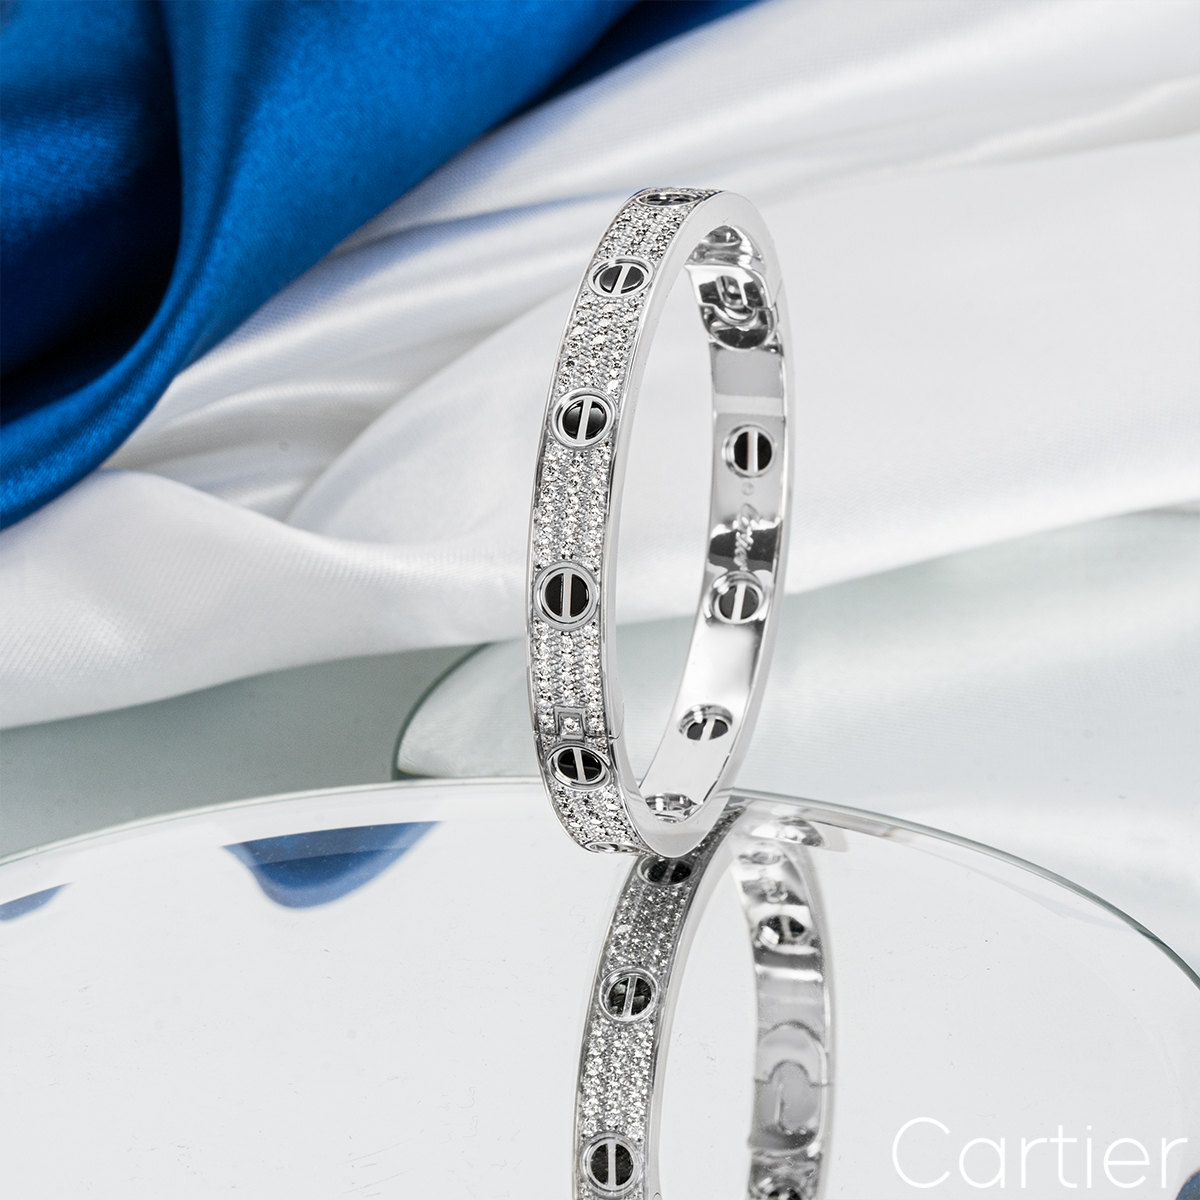 Cartier White Gold Pave Diamond & Ceramic Love Bracelet Size 17 N6032417